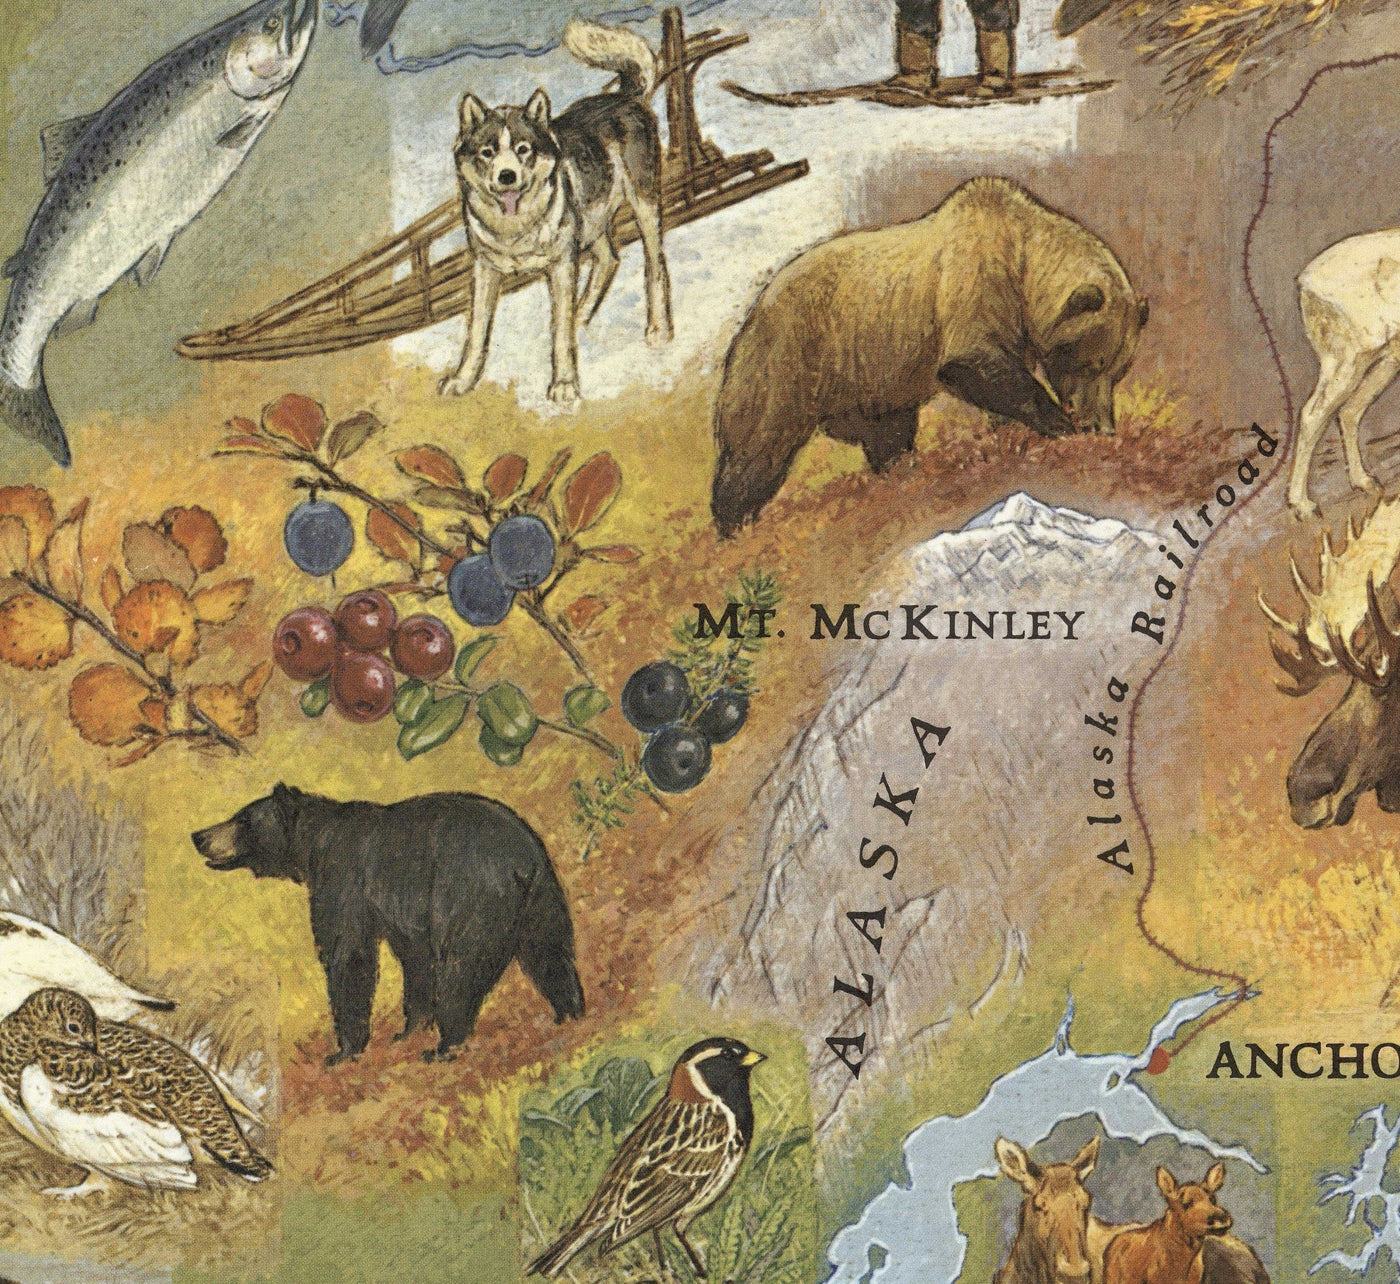 Old Map of Alaska by WD Berry, 1967 - Eskimos, Inuits & Animals - Anchorage, Yukon, Denali/McKinley